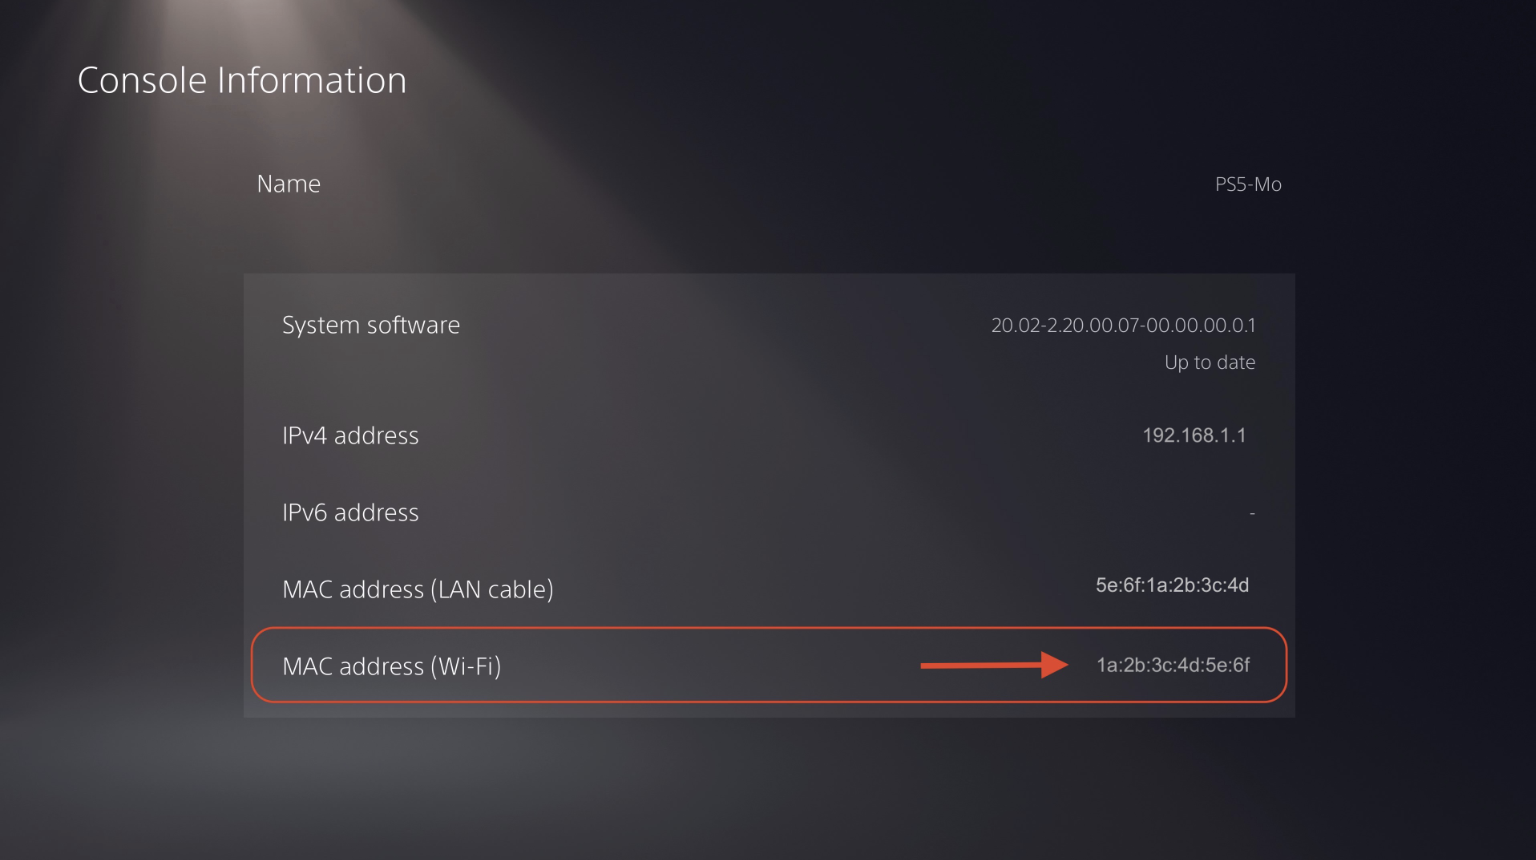 PlayStation 5 settings screen showing the WiFi MAC address